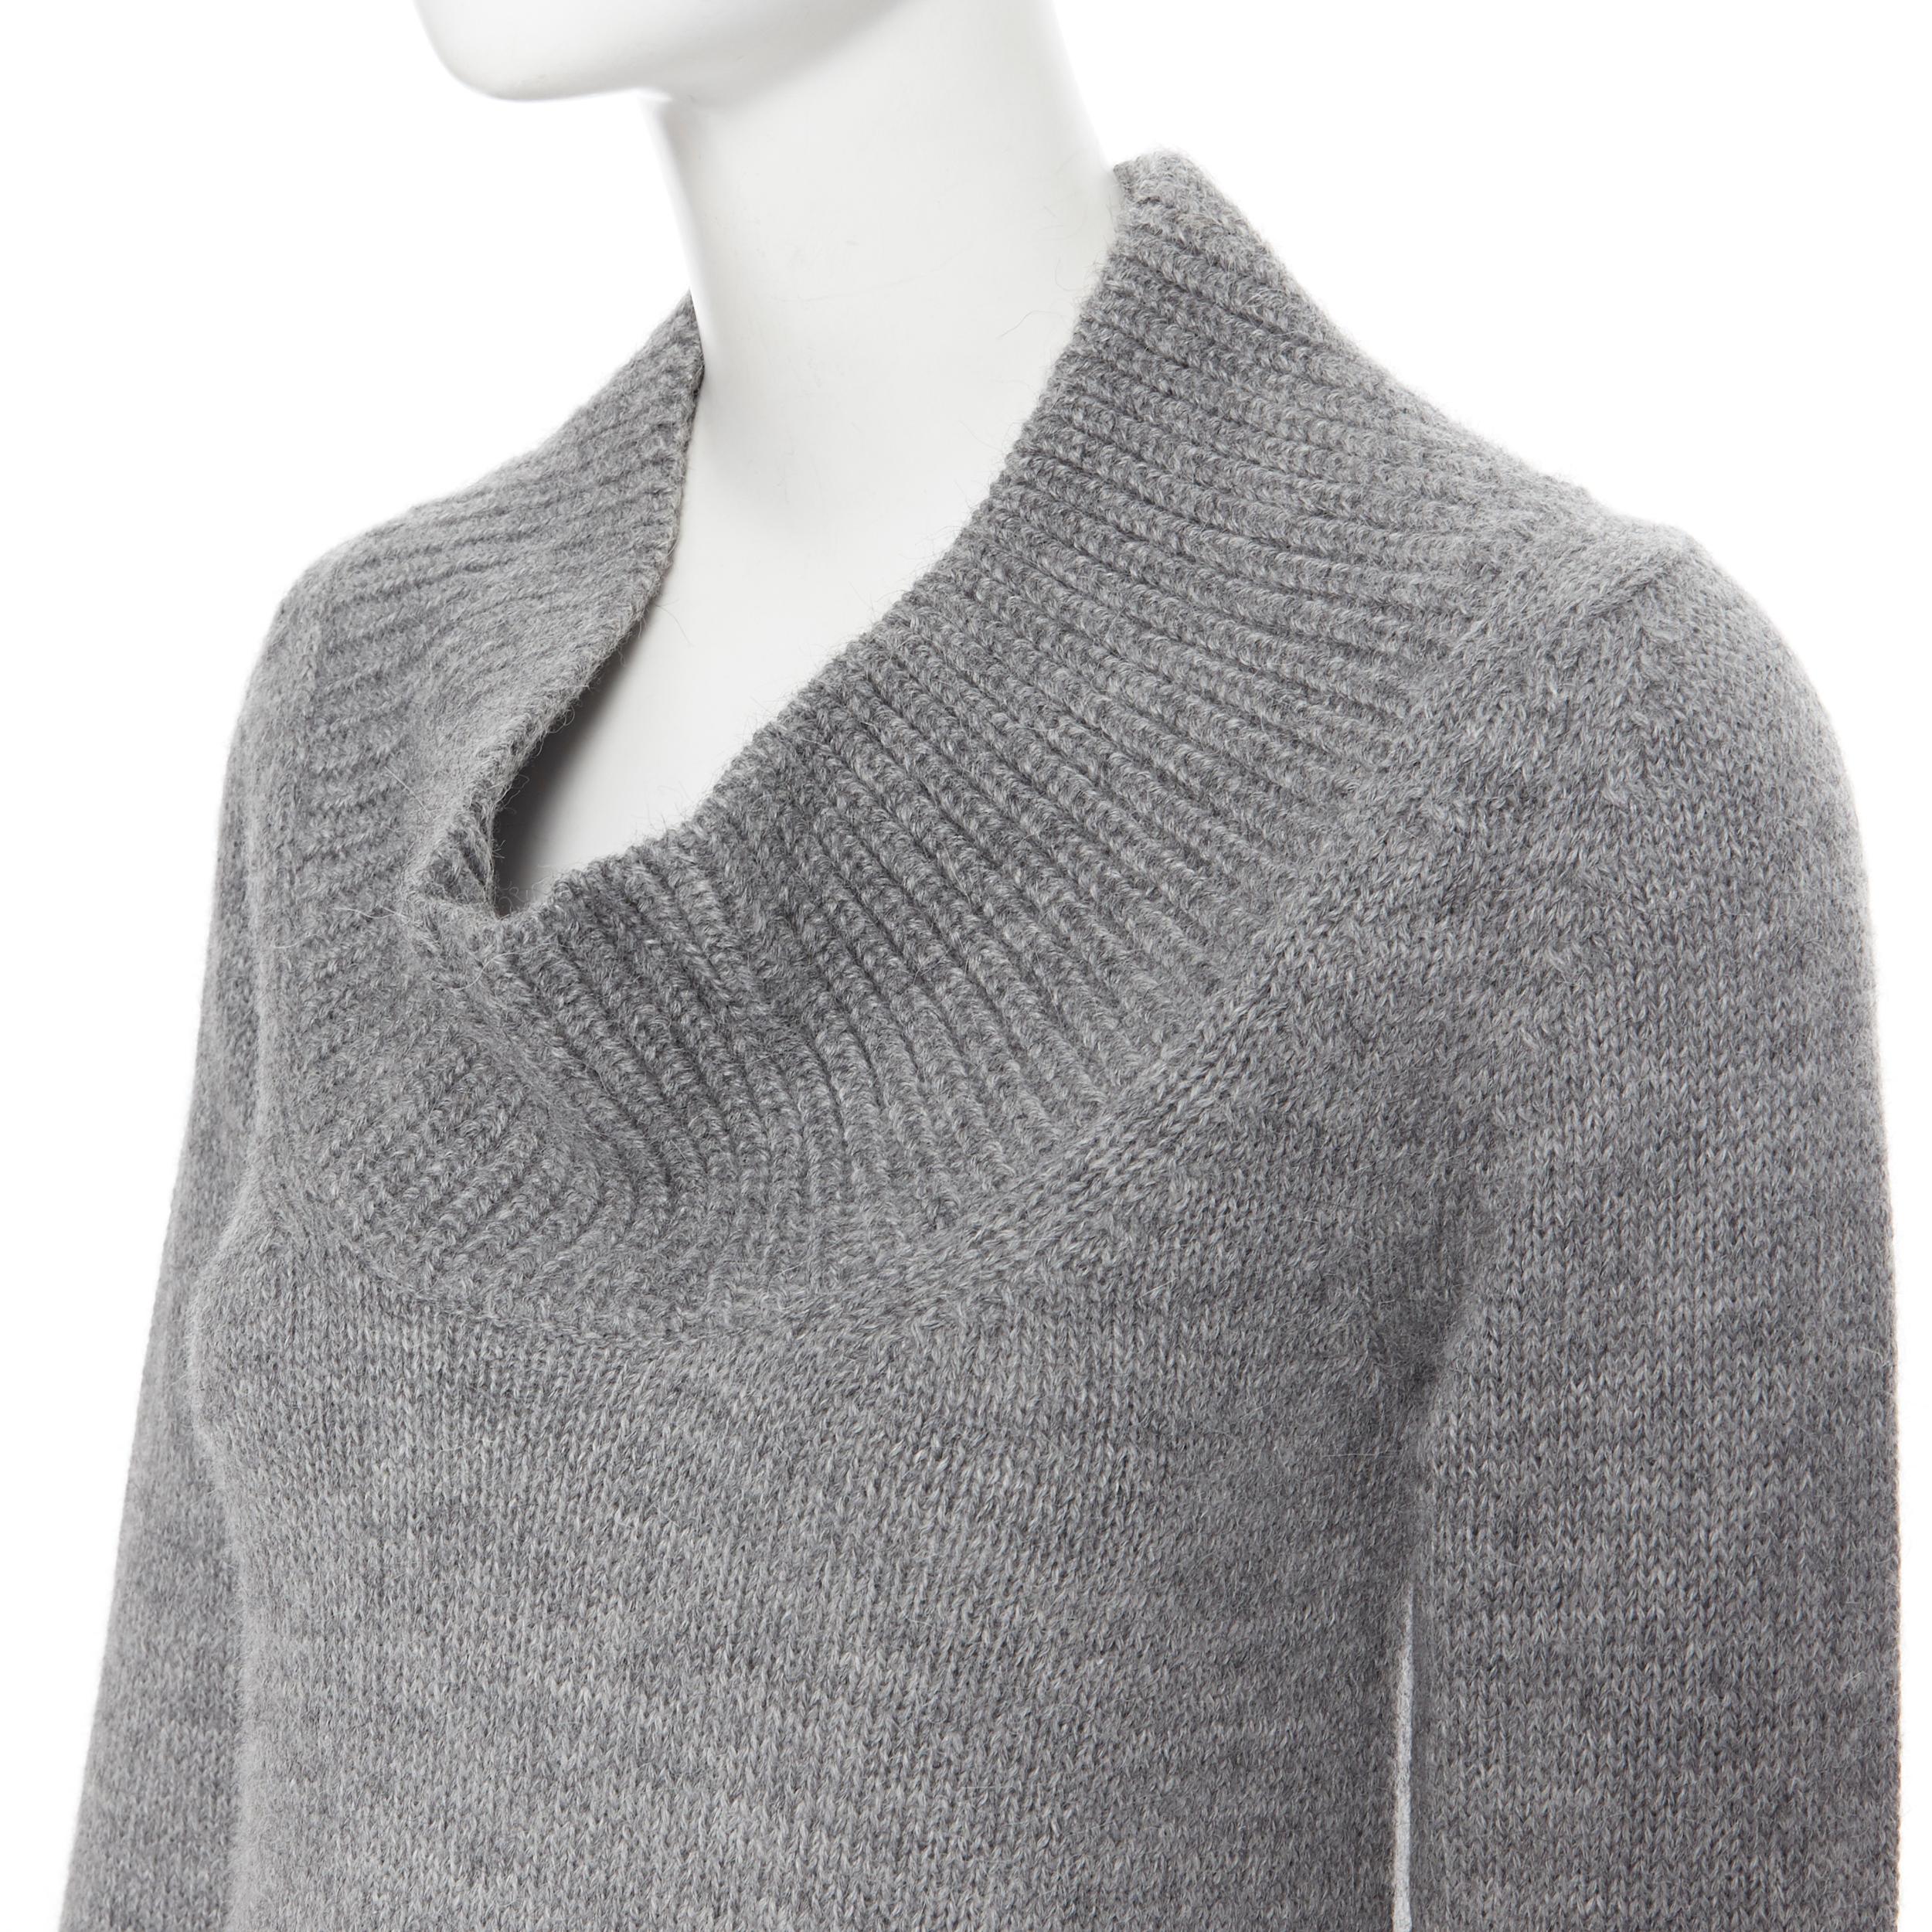 CHLOE alpaca wool grey open cowl neck long sleeve sweater dress XS
Brand: Chloe
Model Name / Style: Sweater dress
Material: Wool
Color: Grey
Pattern: Solid
Extra Detail: Ribbed open cowl neck. Long sleeve. Cowl neck neckline.
Made in: